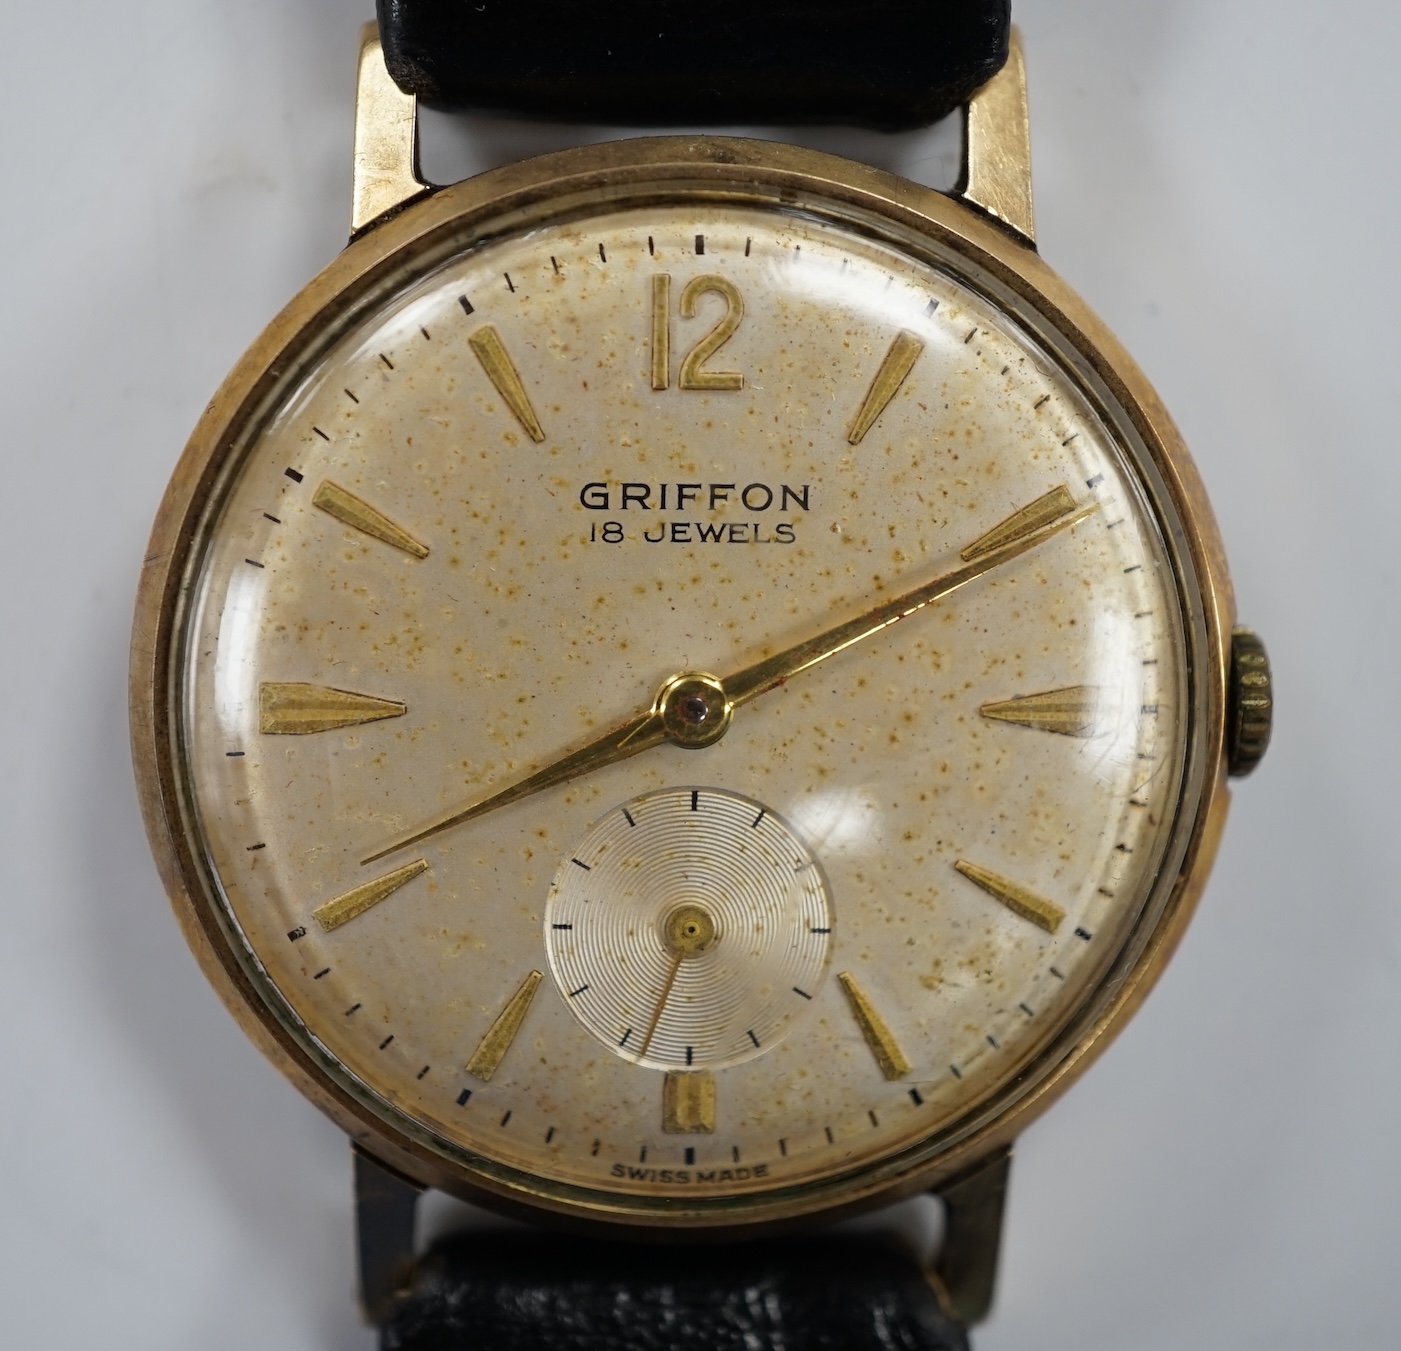 A gentleman's Swiss 9ct gold Griffon manual wind wrist watch, on a leather strap.